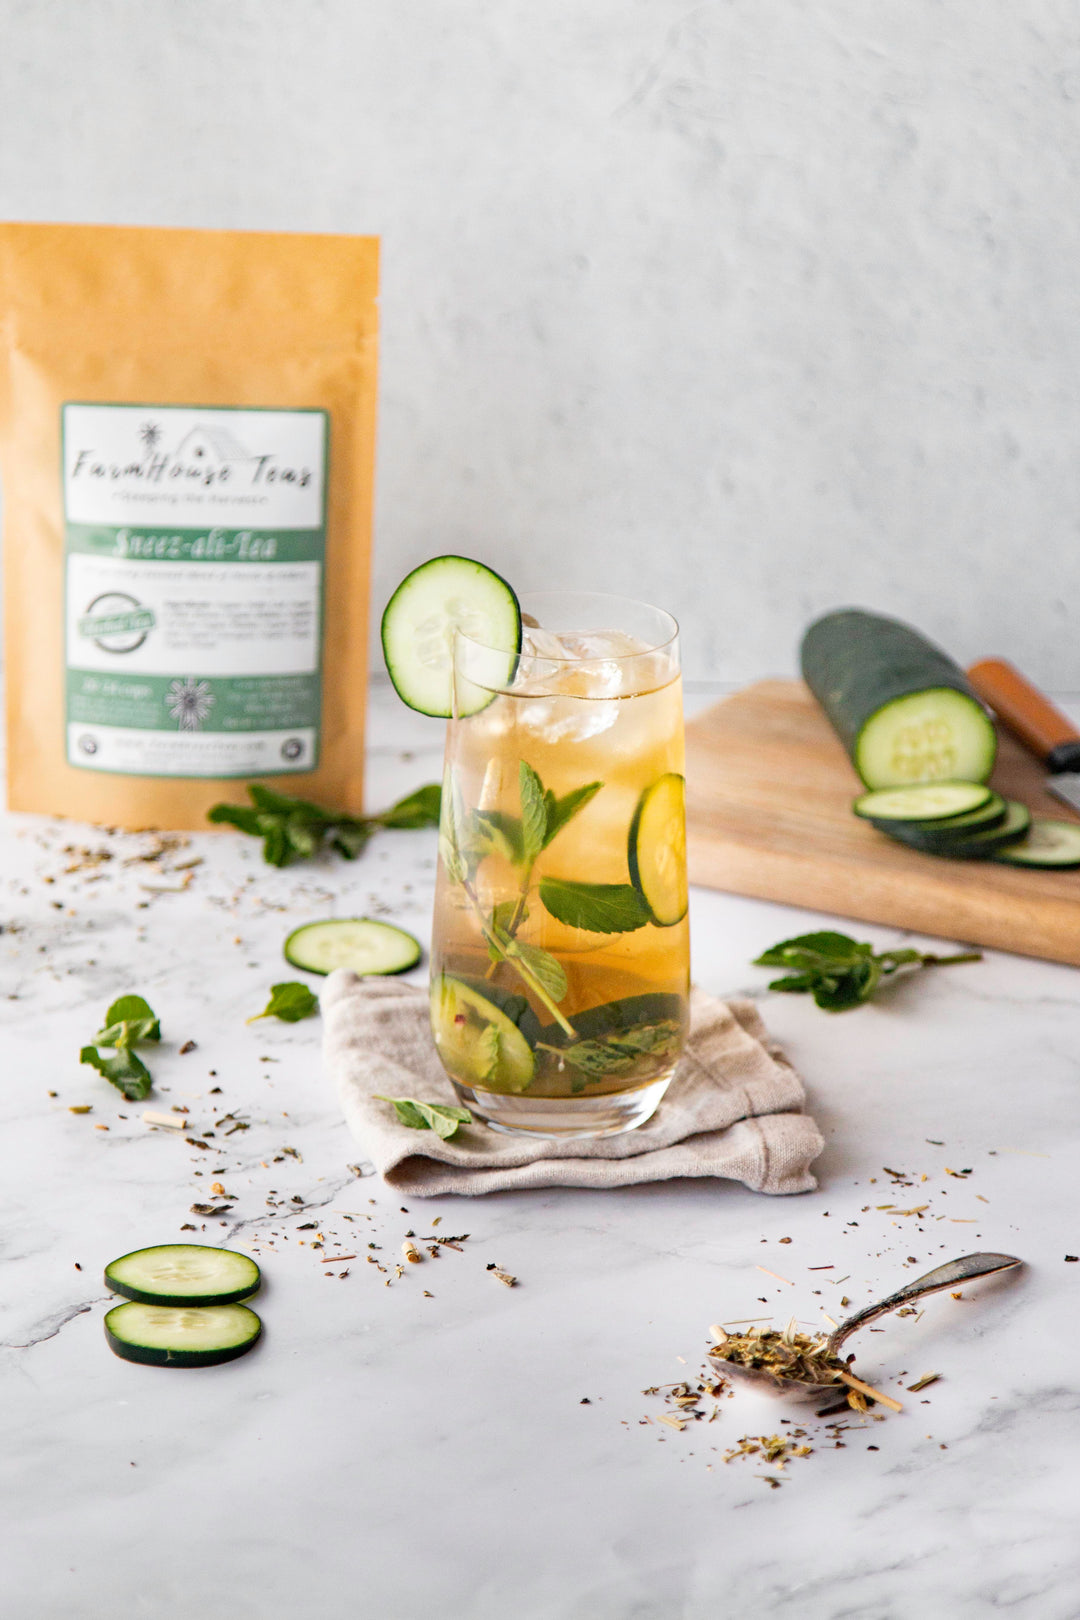 Sneez-ali-tea Organic Loose Leaf Tea Blend - Farmhouse Teas